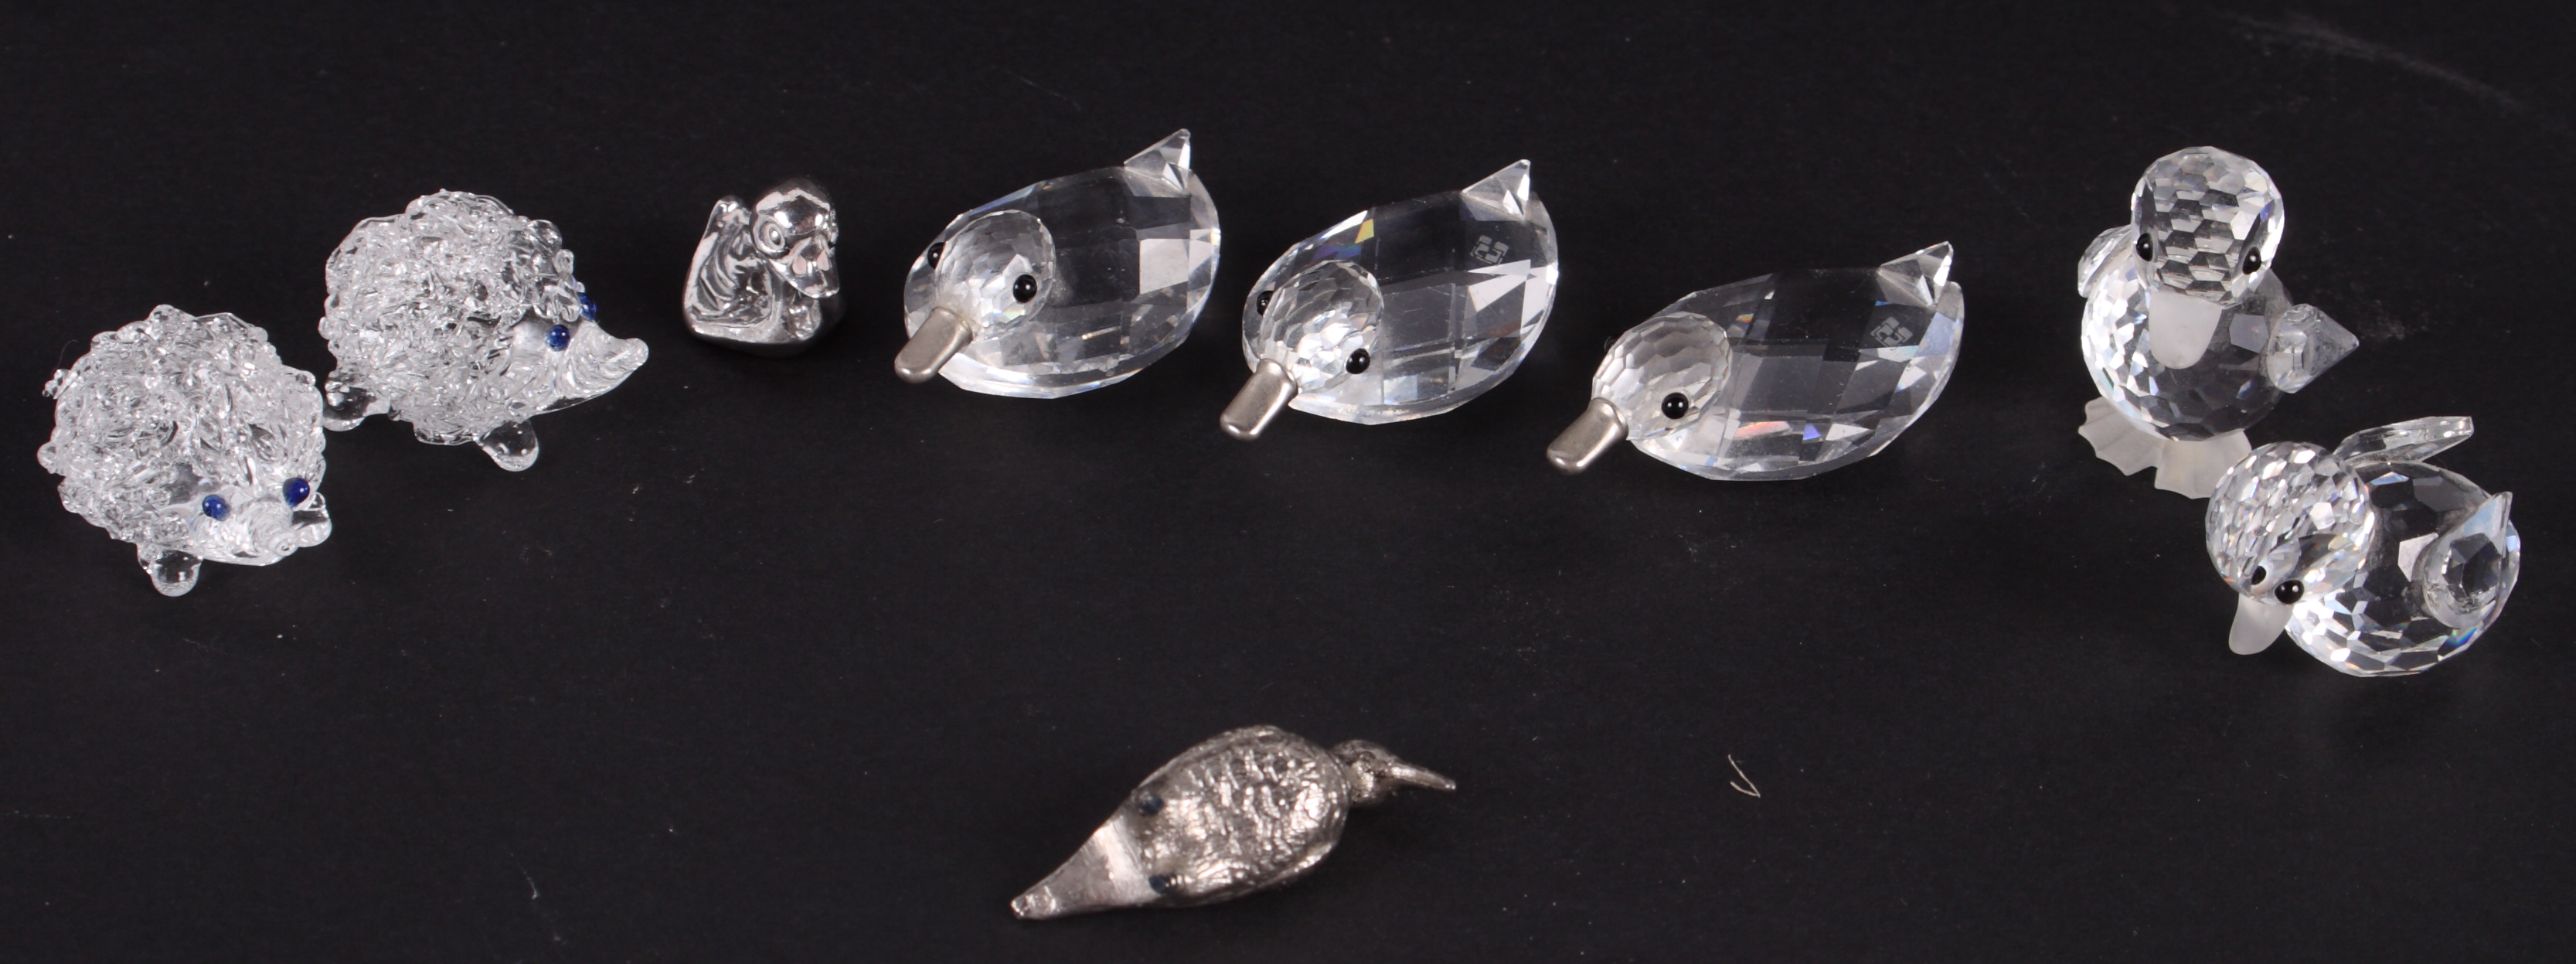 Three Swarovski crystal ducks, two similar chicks and other small ornamental items